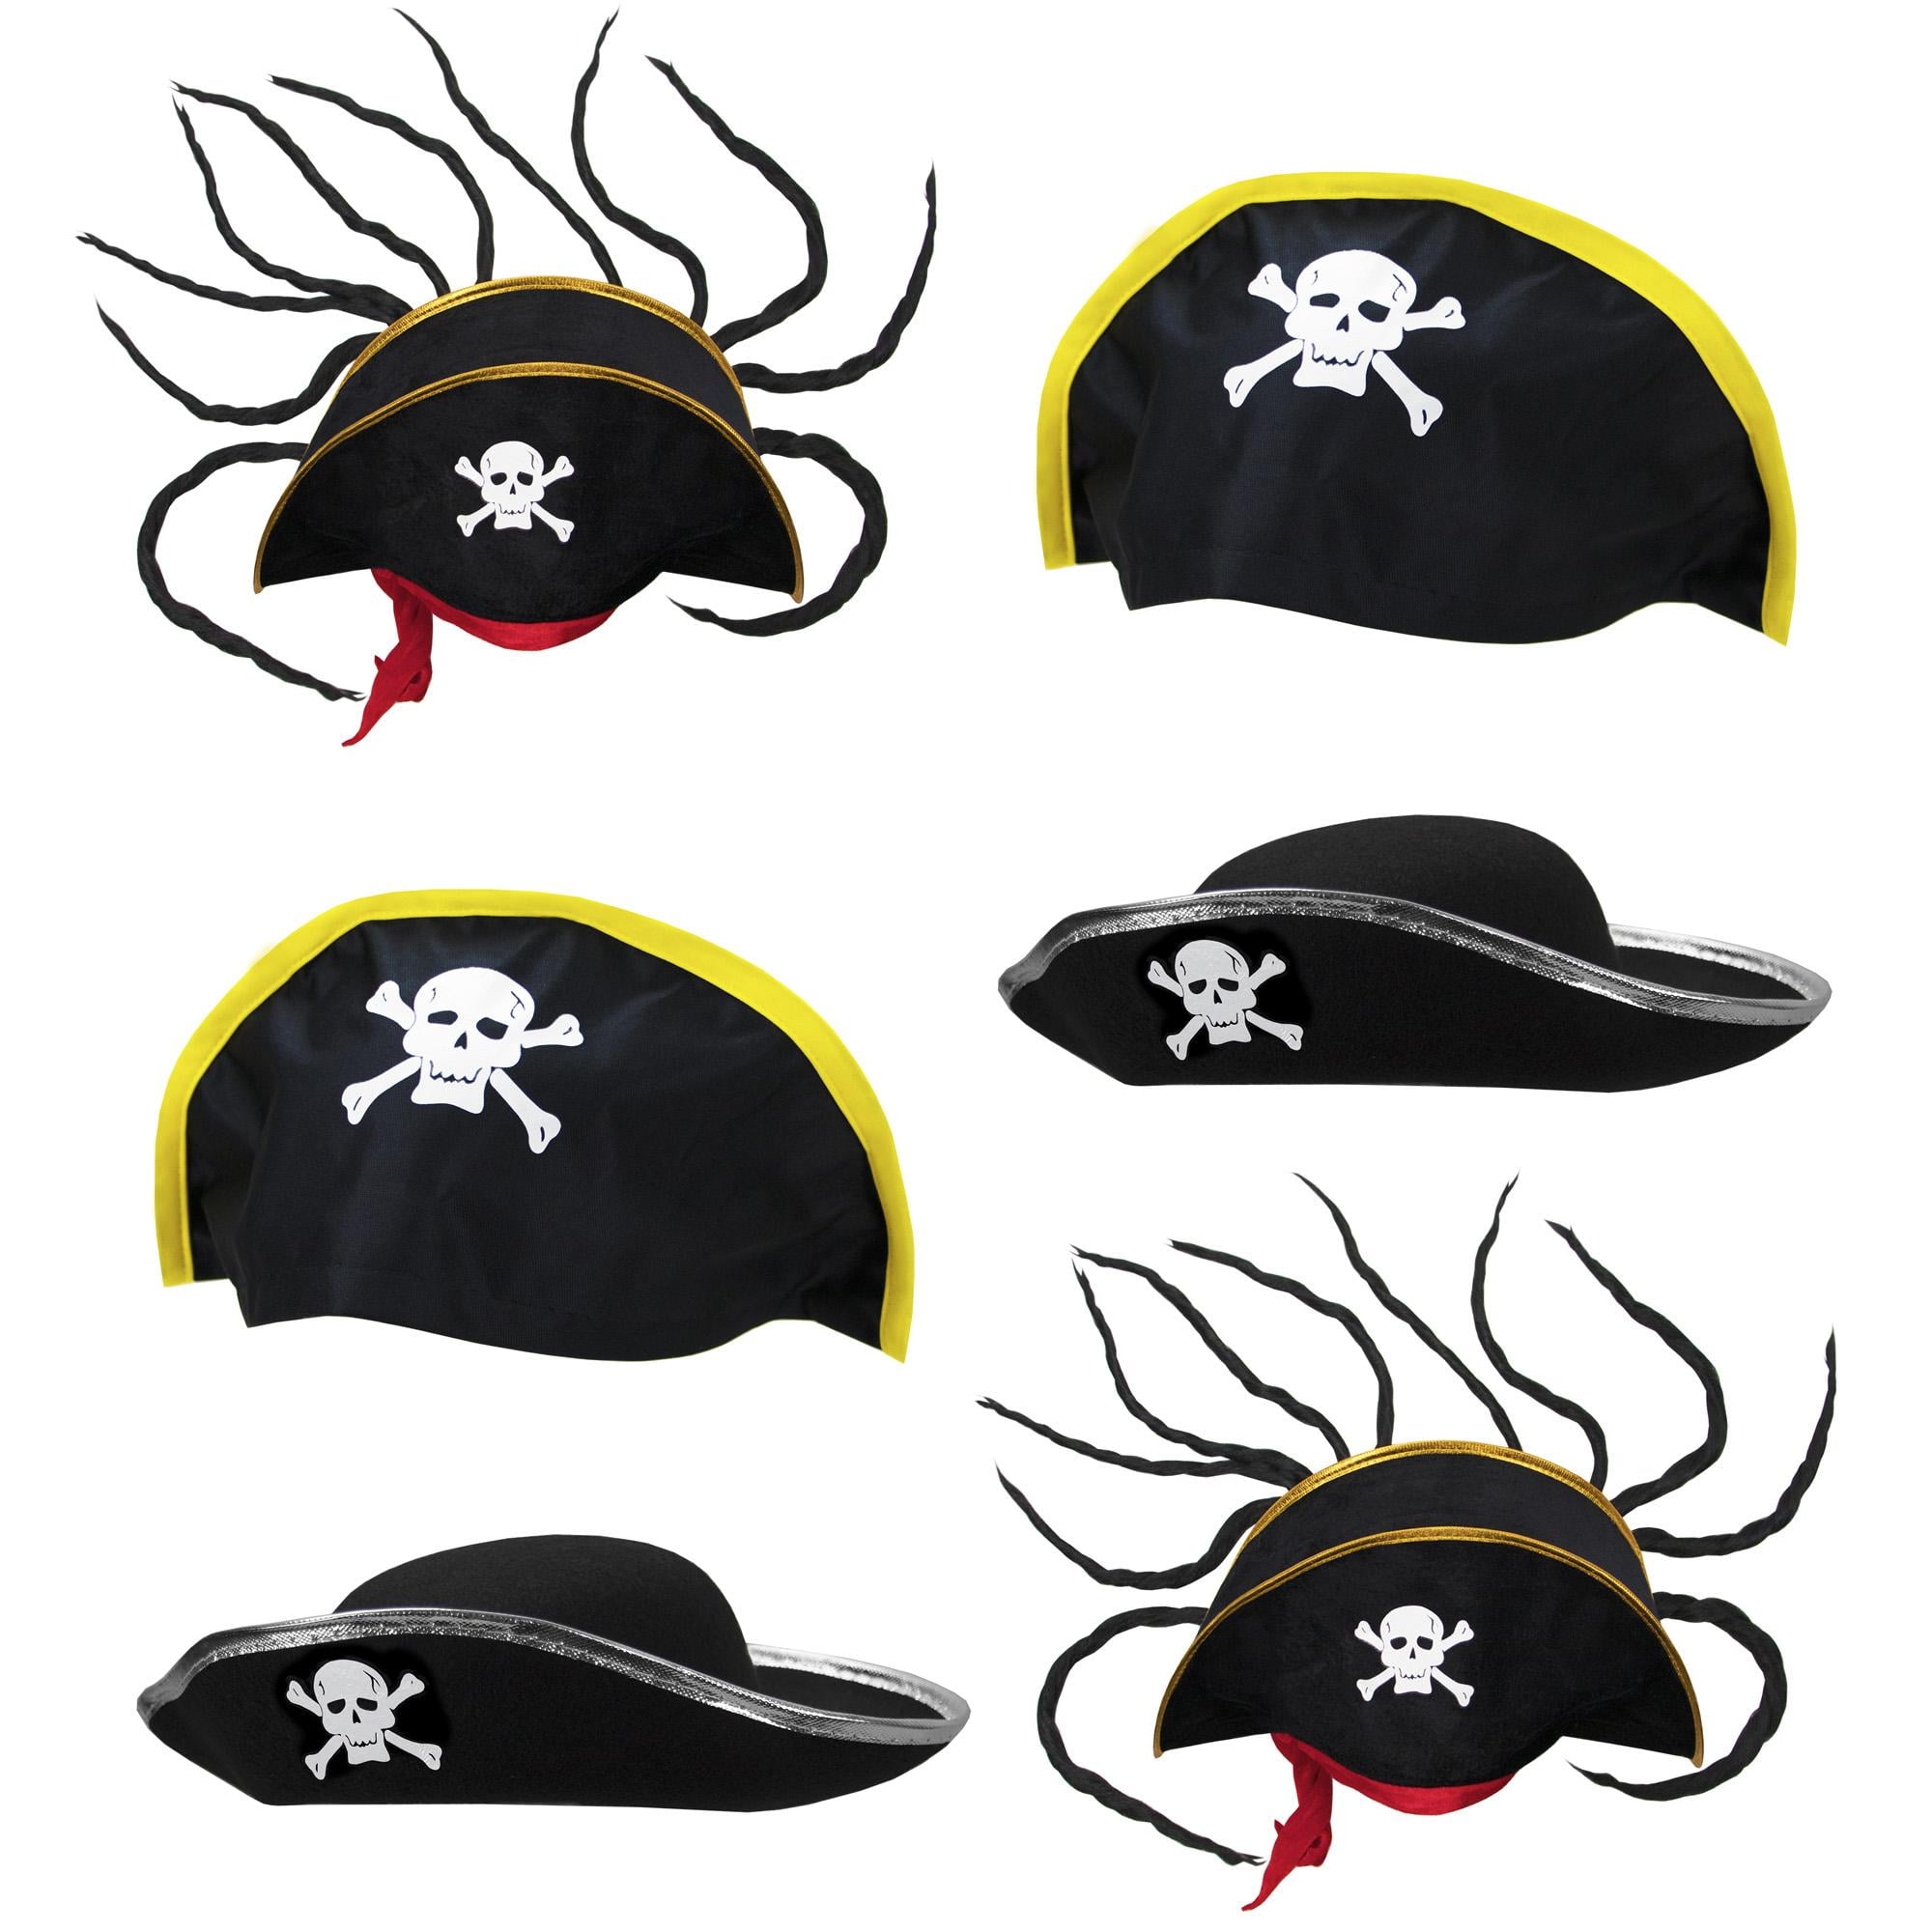 Pirate Hat Pack, 6 Halloween Costume Accessories Dress Up Headwear